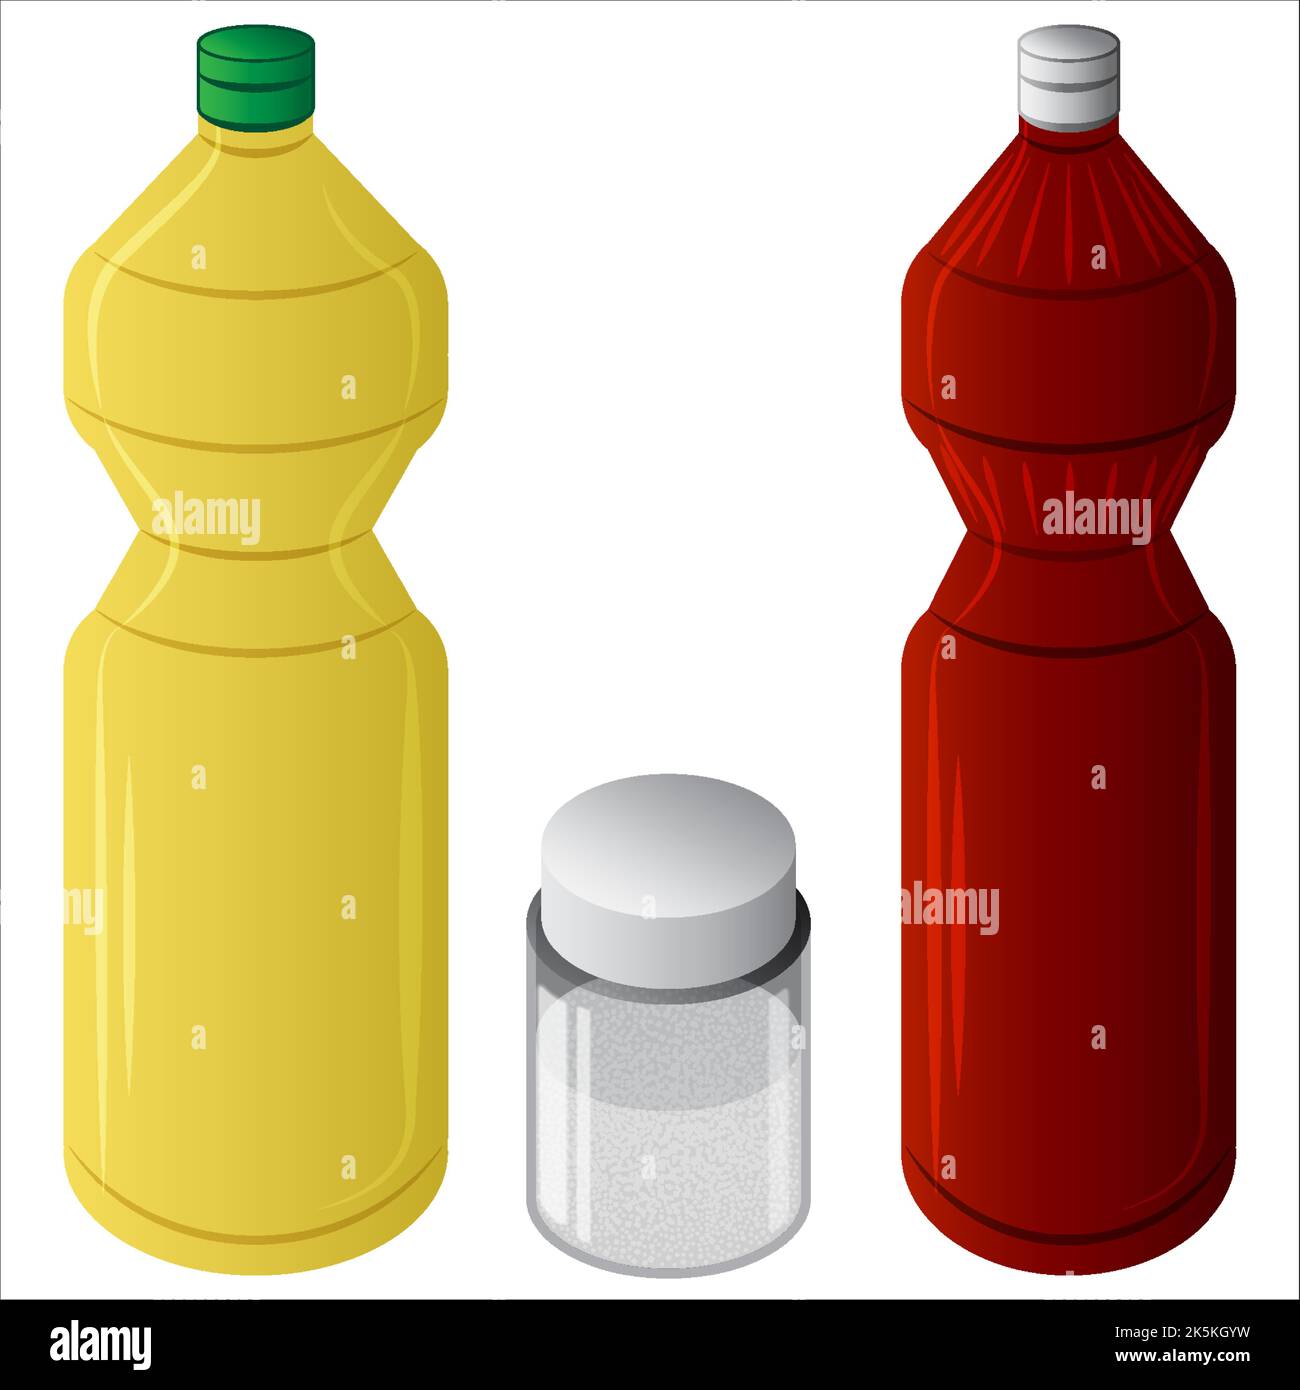 https://c8.alamy.com/comp/2K5KGYW/vector-illustration-vegetable-oil-fish-sauce-sugar-or-salt-isolated-on-white-background-2K5KGYW.jpg